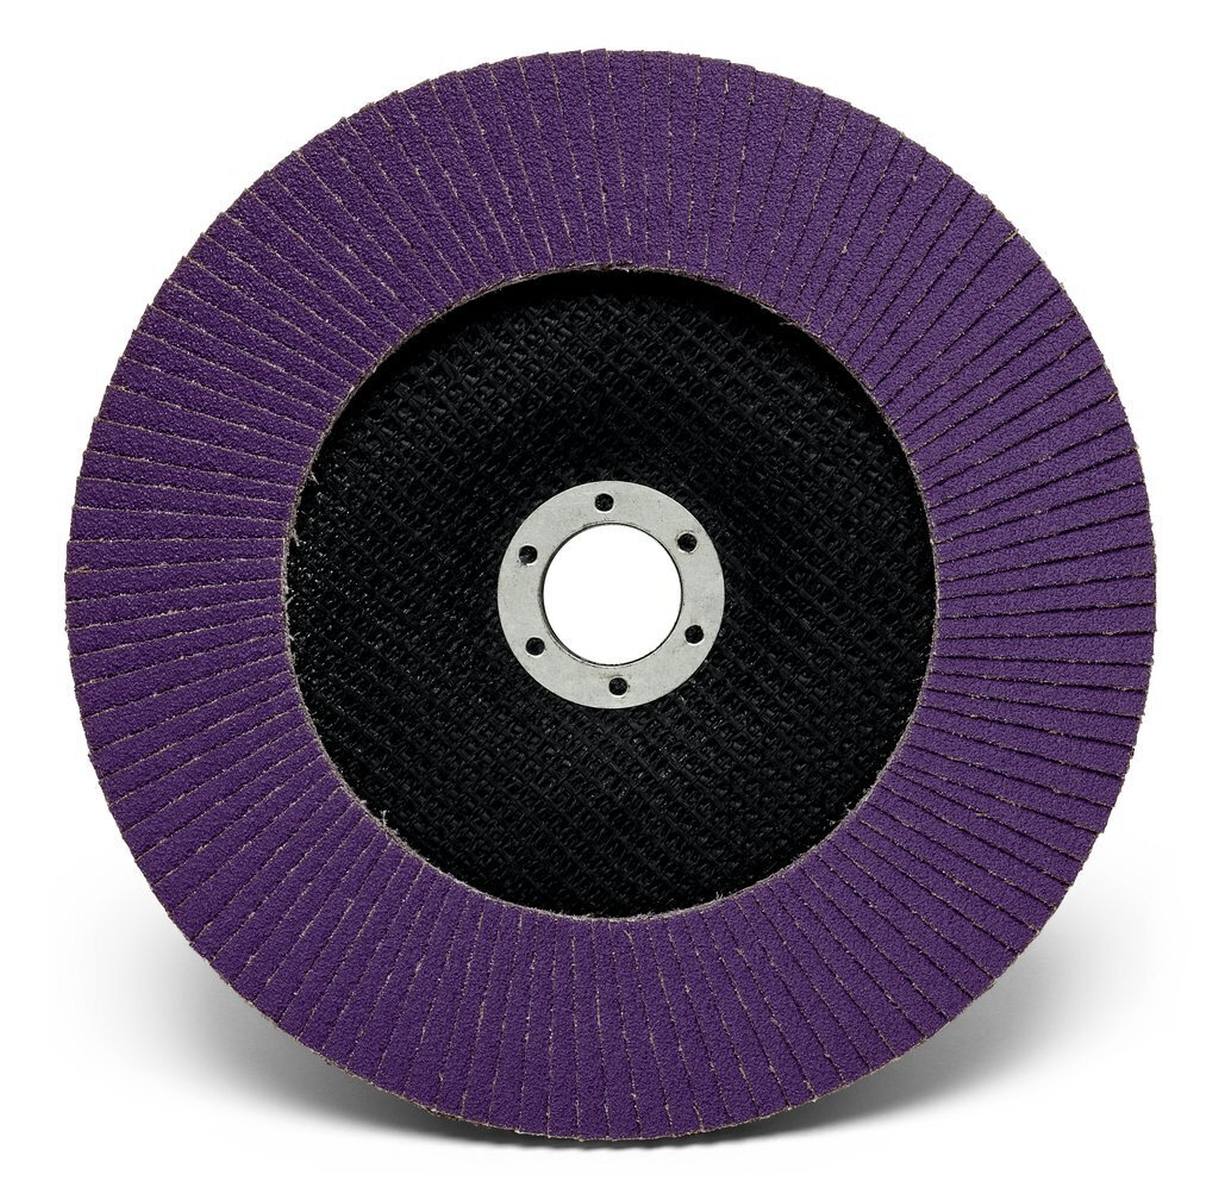 3M flap disc 769F, 180 mm, 22.23 mm, P60 , conical